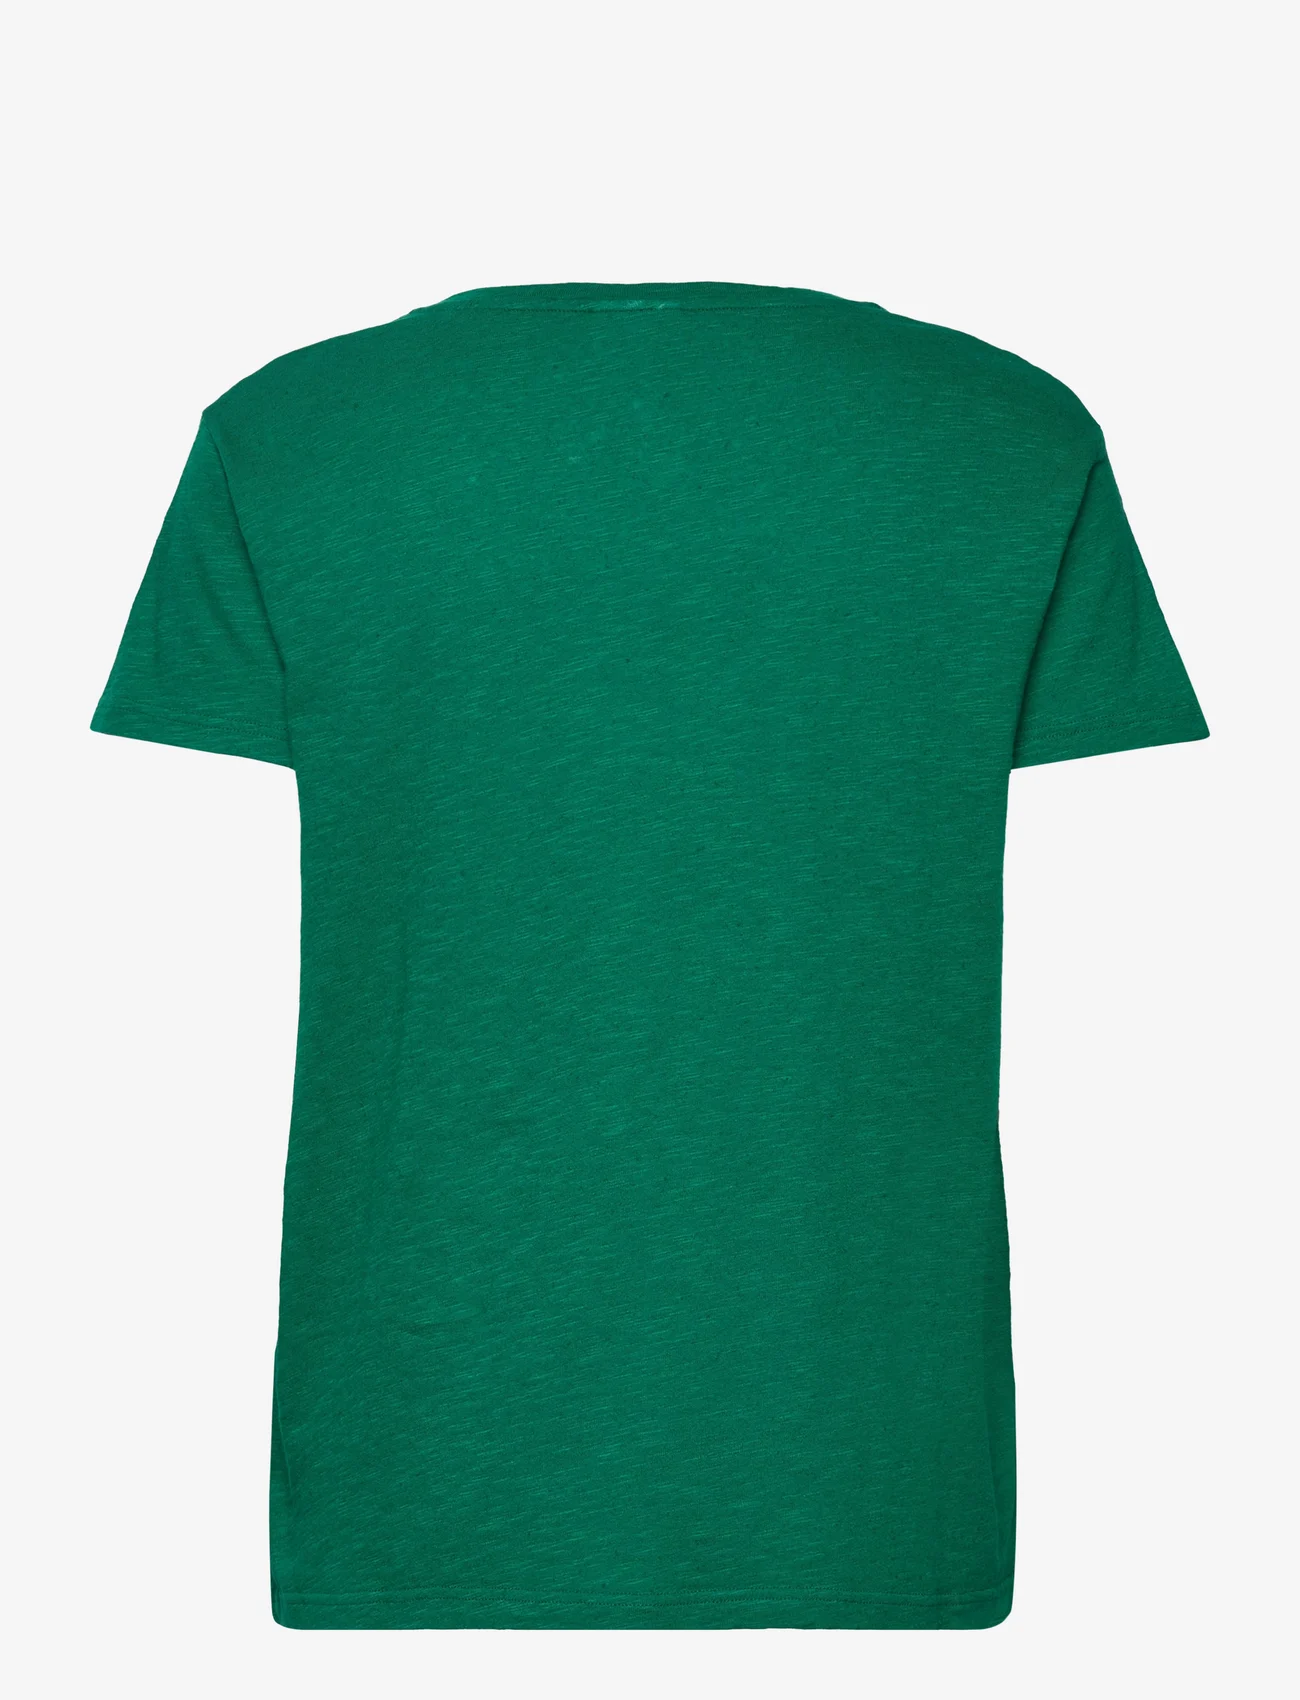 2NDDAY - 2ND Beverly - t-shirts - ultramarine green - 1